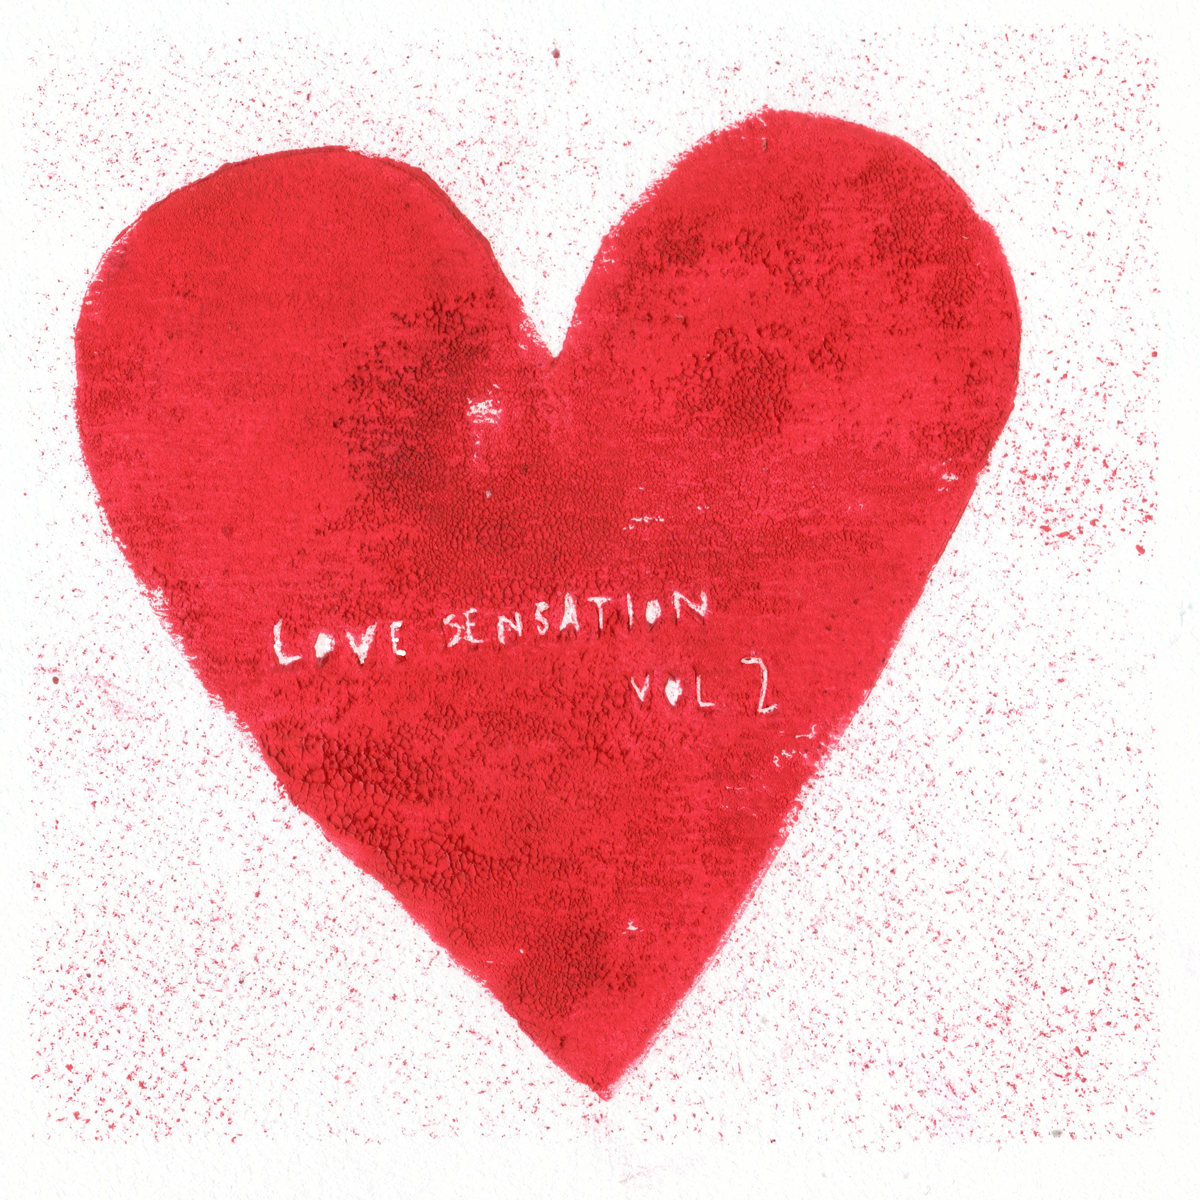 Mix | Love Sensation Vol. 2